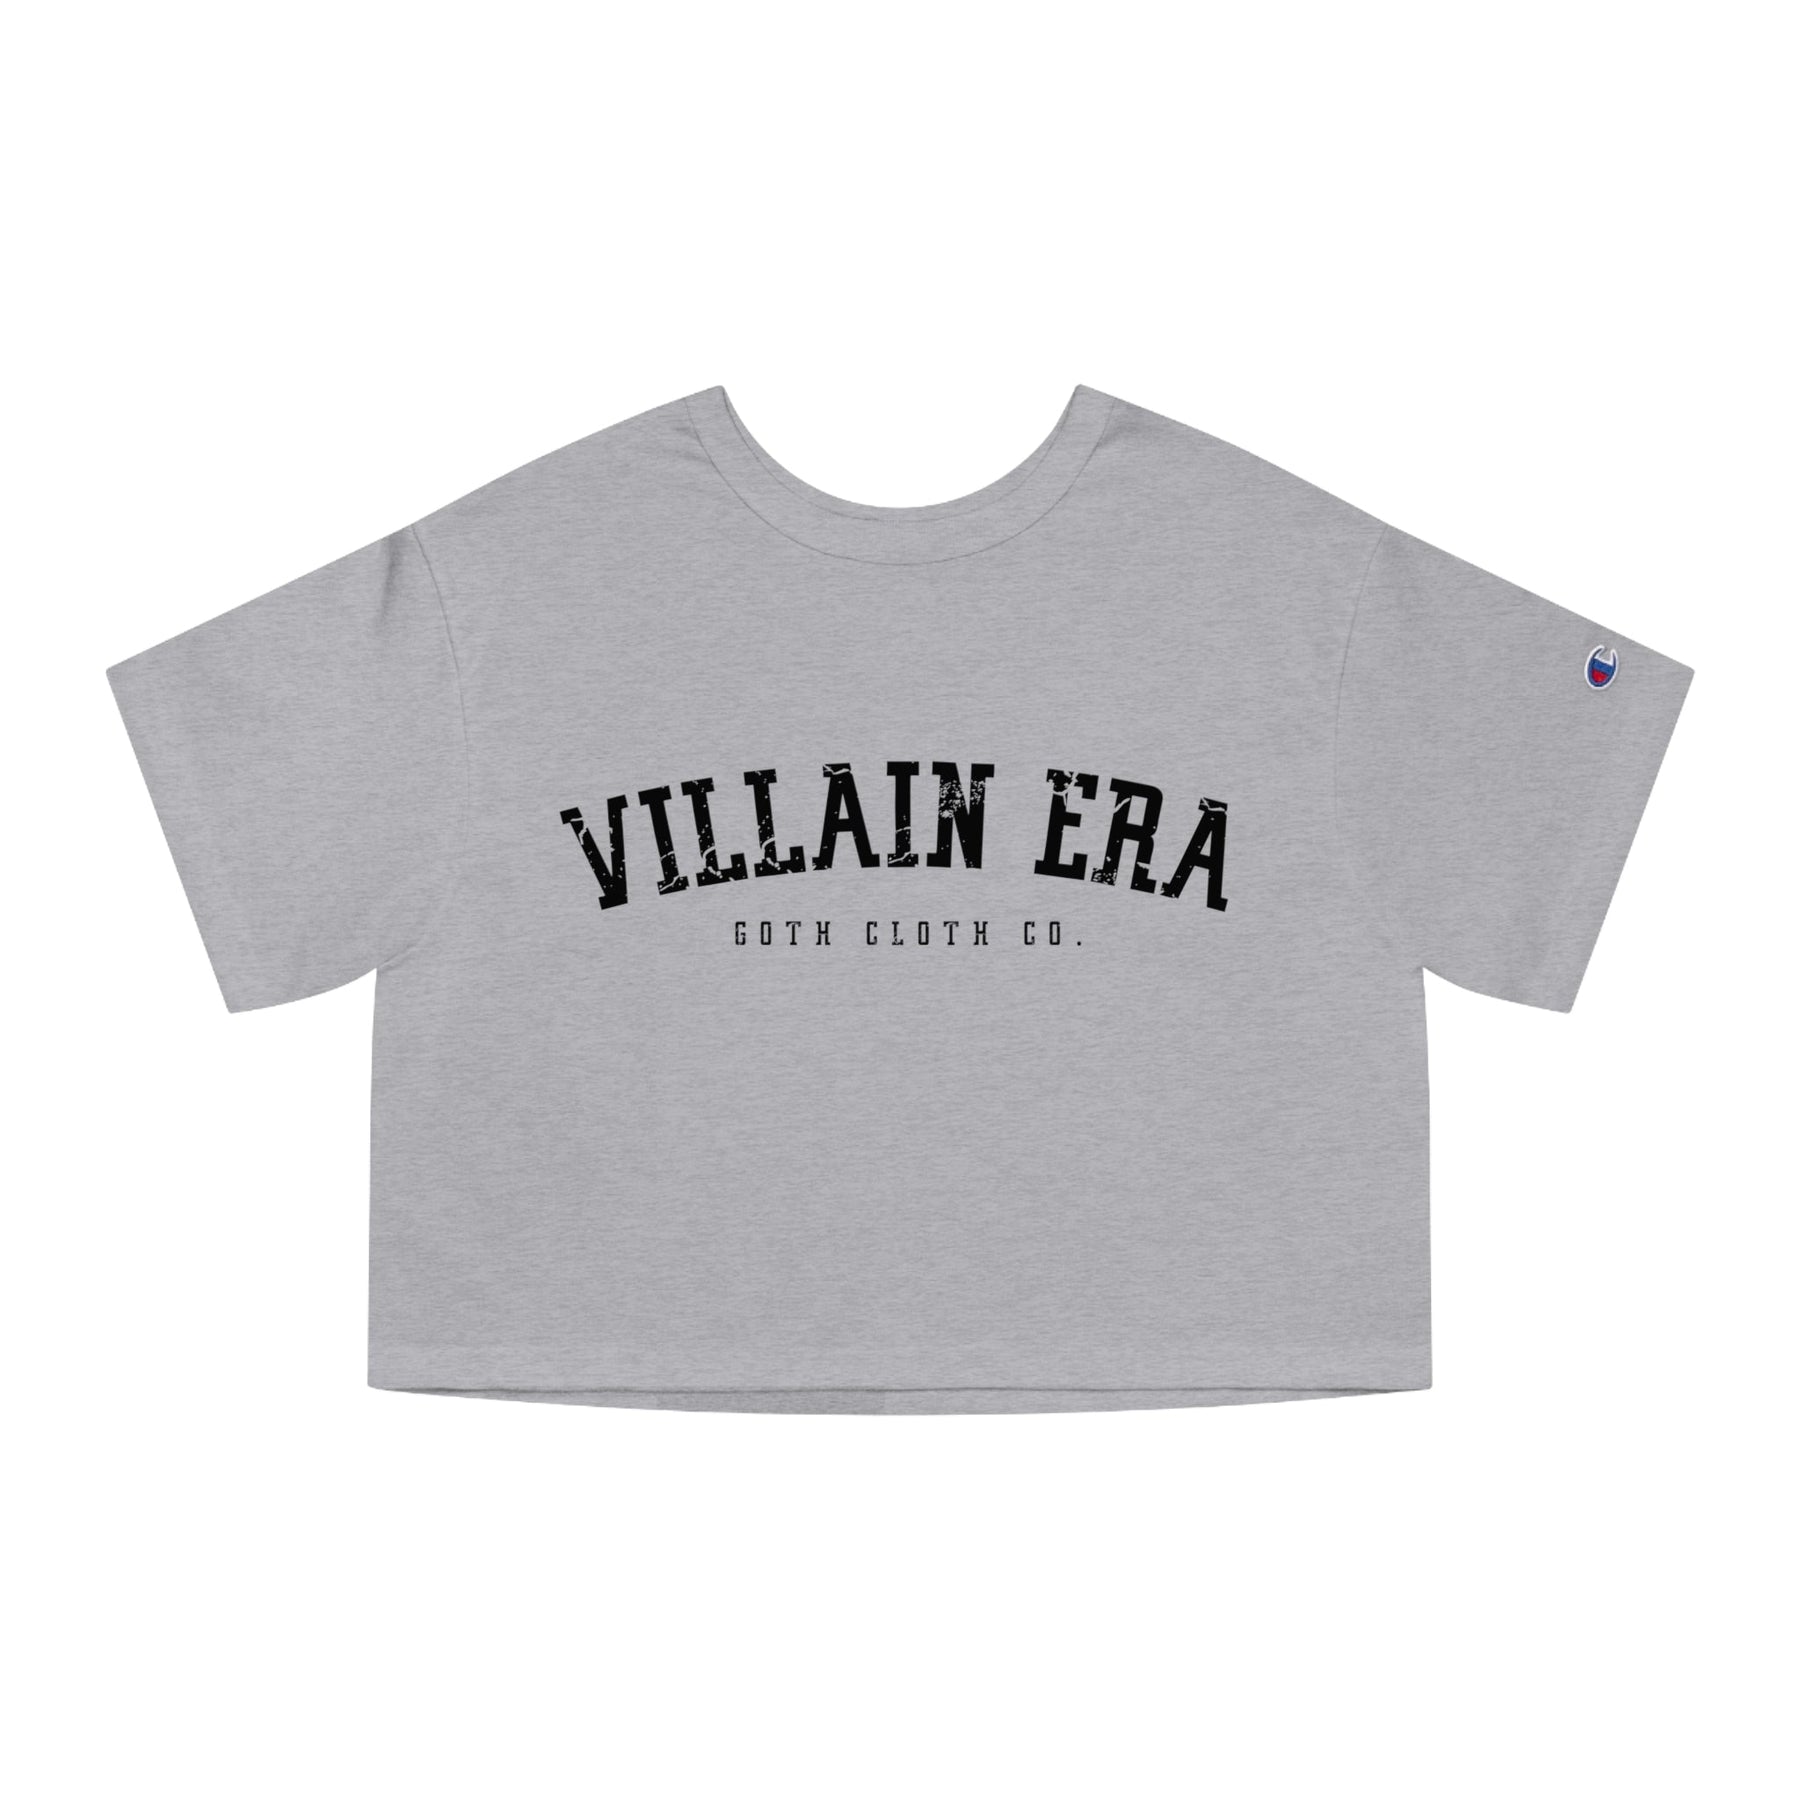 Villain Era Uni. Heavyweight Crop Top - Goth Cloth Co.T-Shirt11244547957399395672